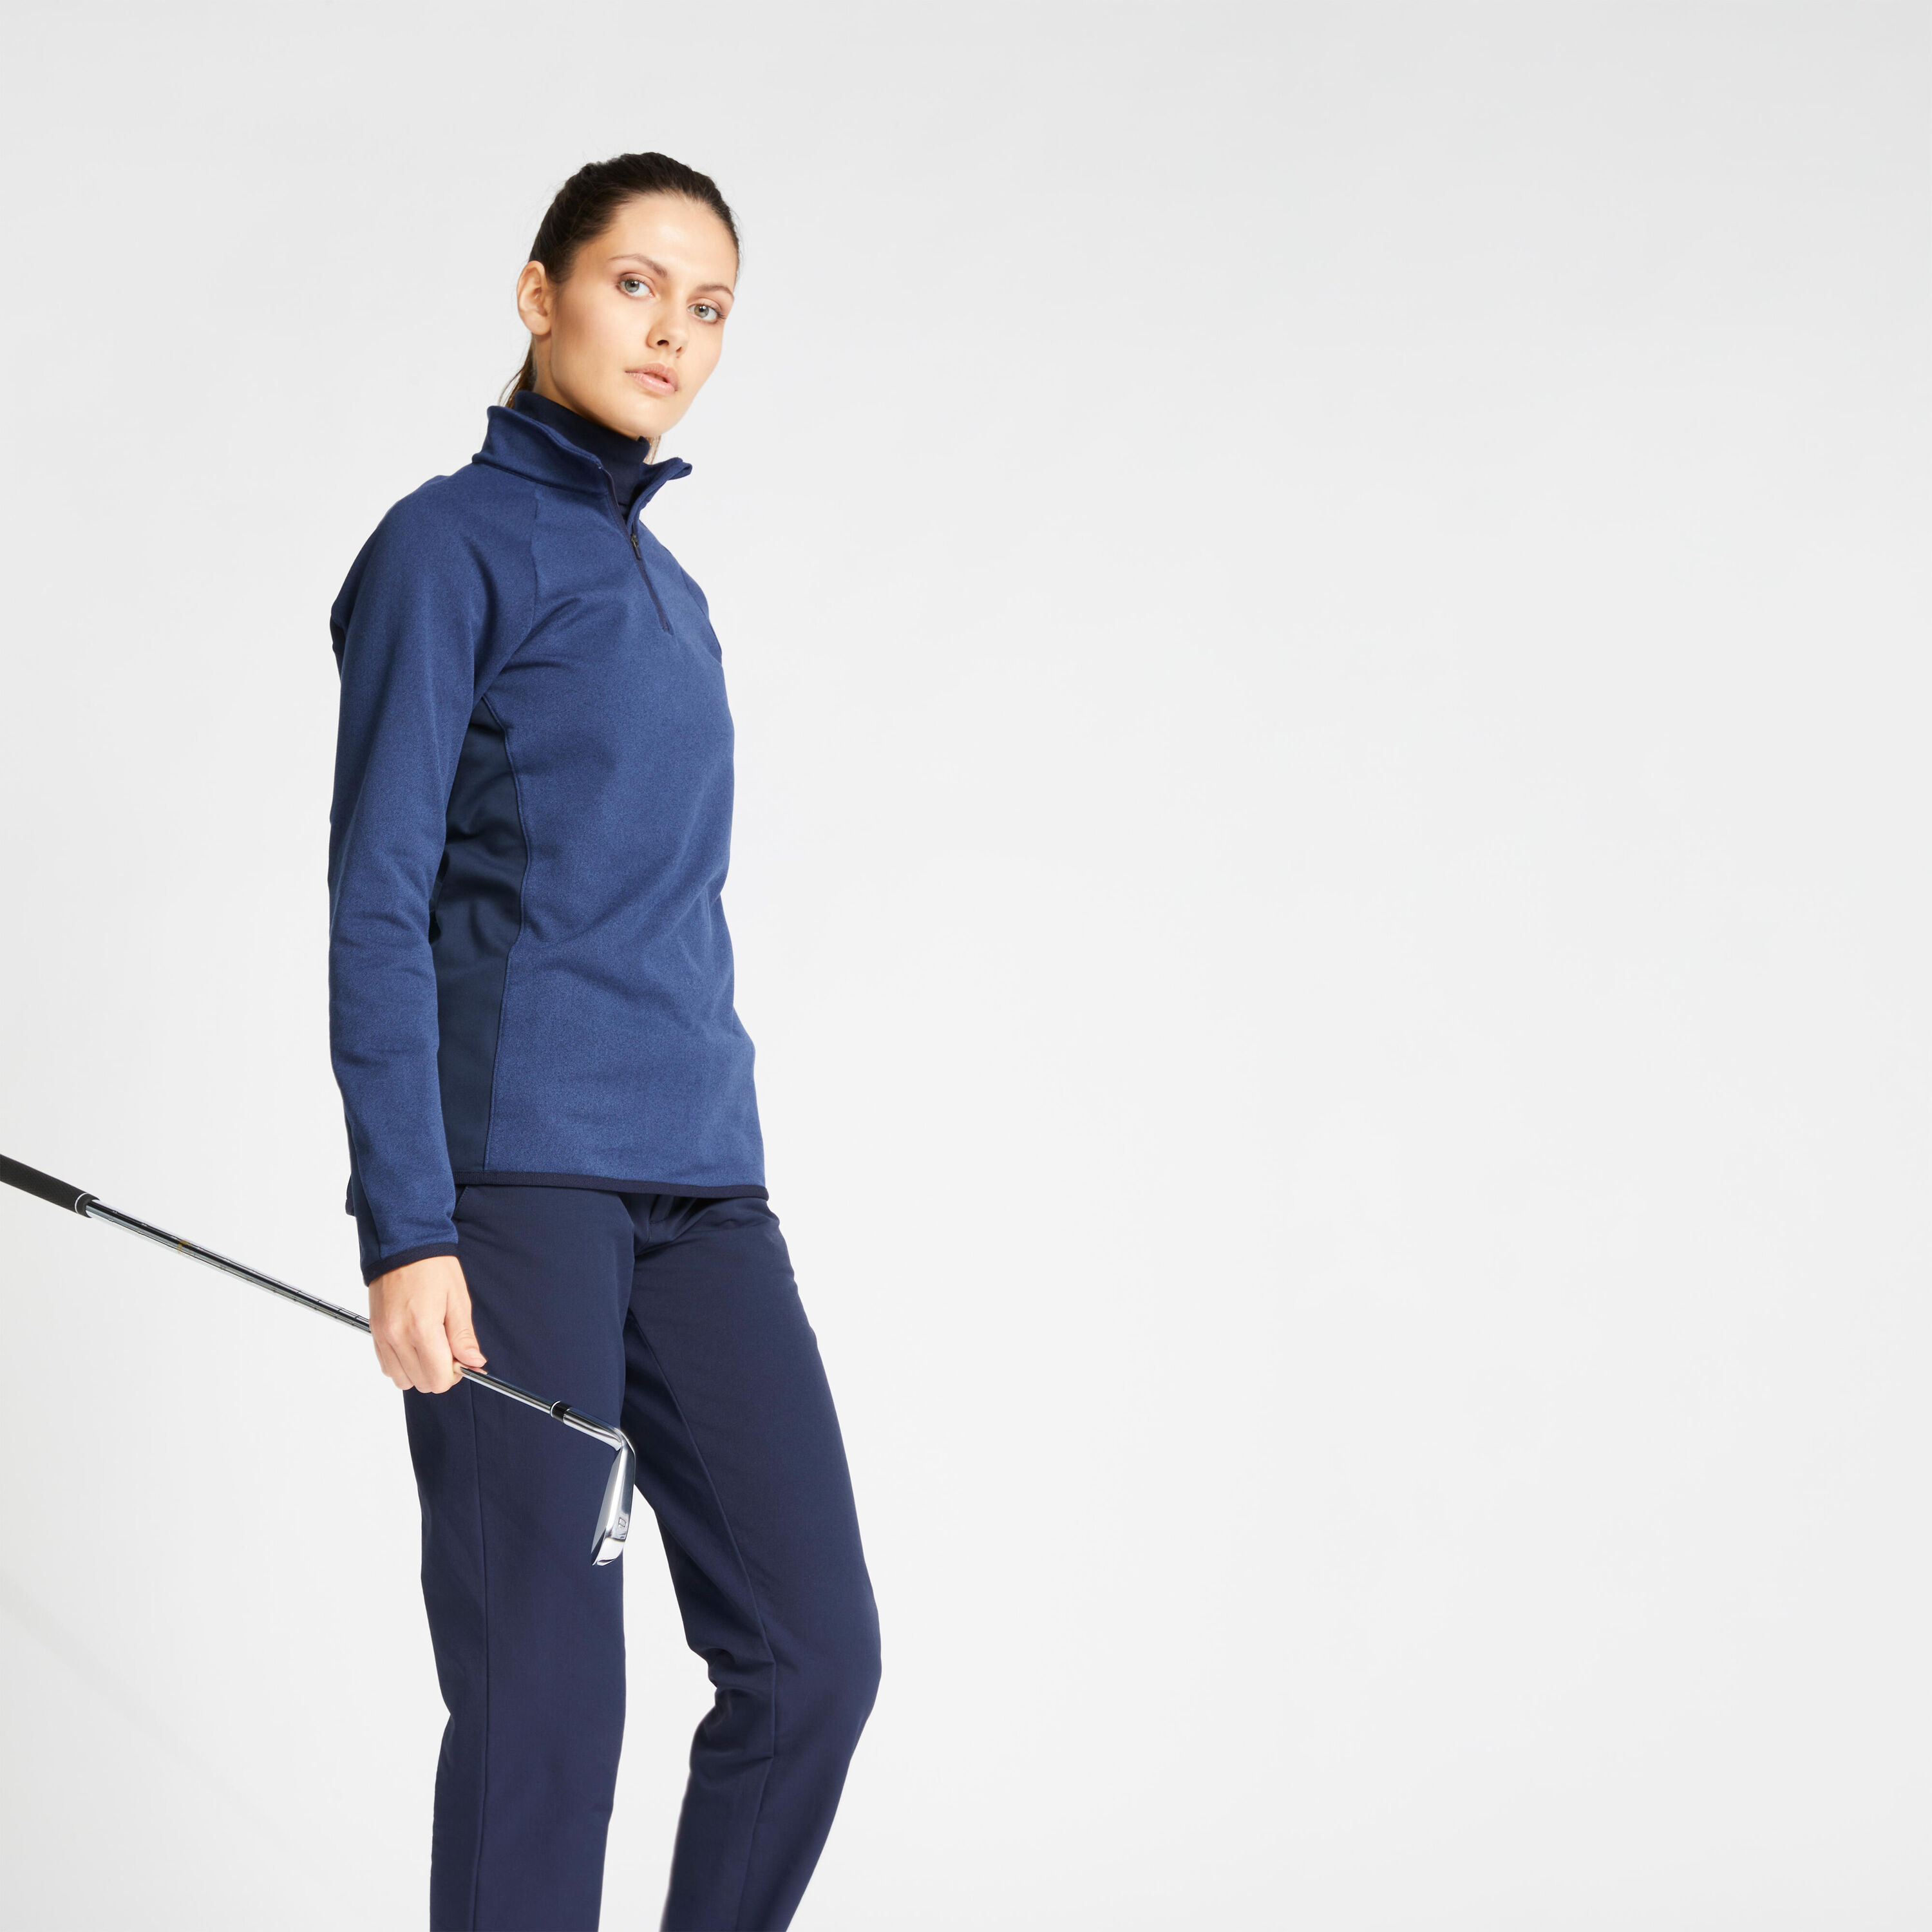 INESIS Women's golf fleece pullover CW500 navy blue